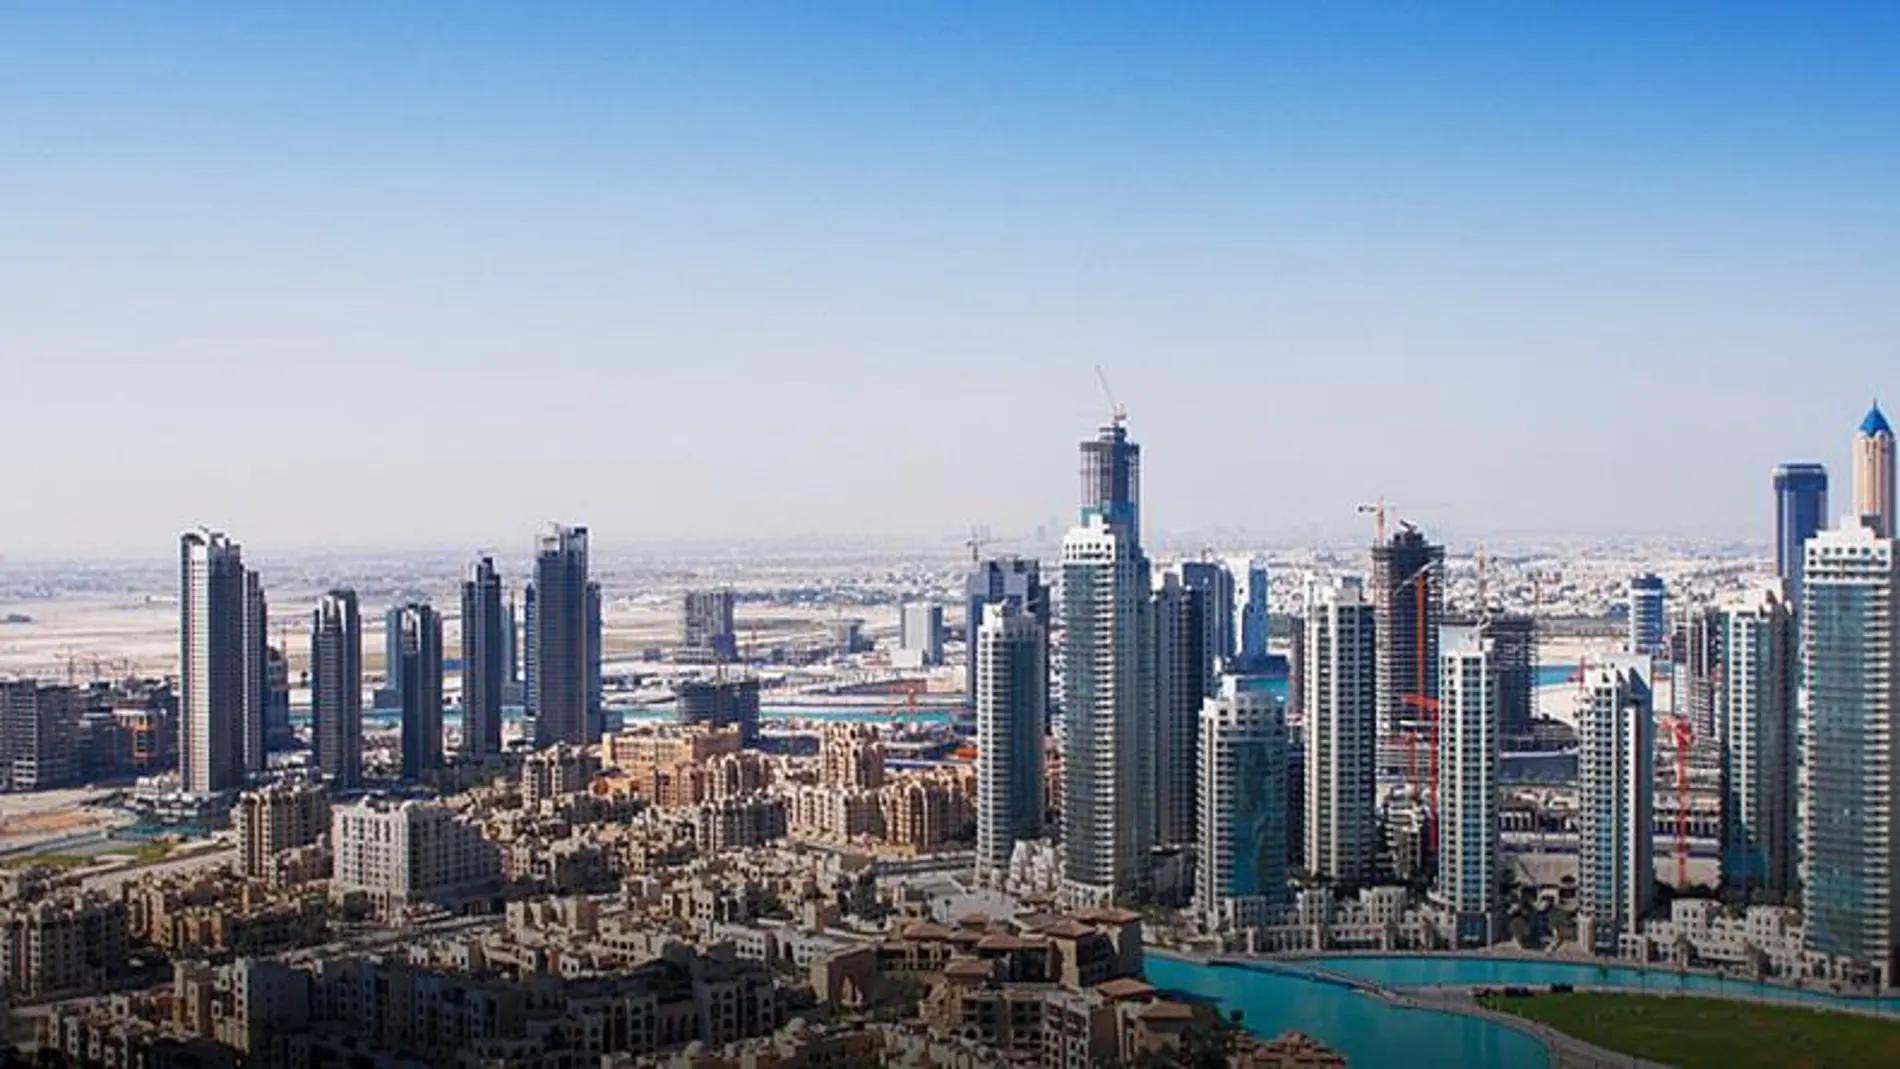 Vistas de la ciudad de Dubai